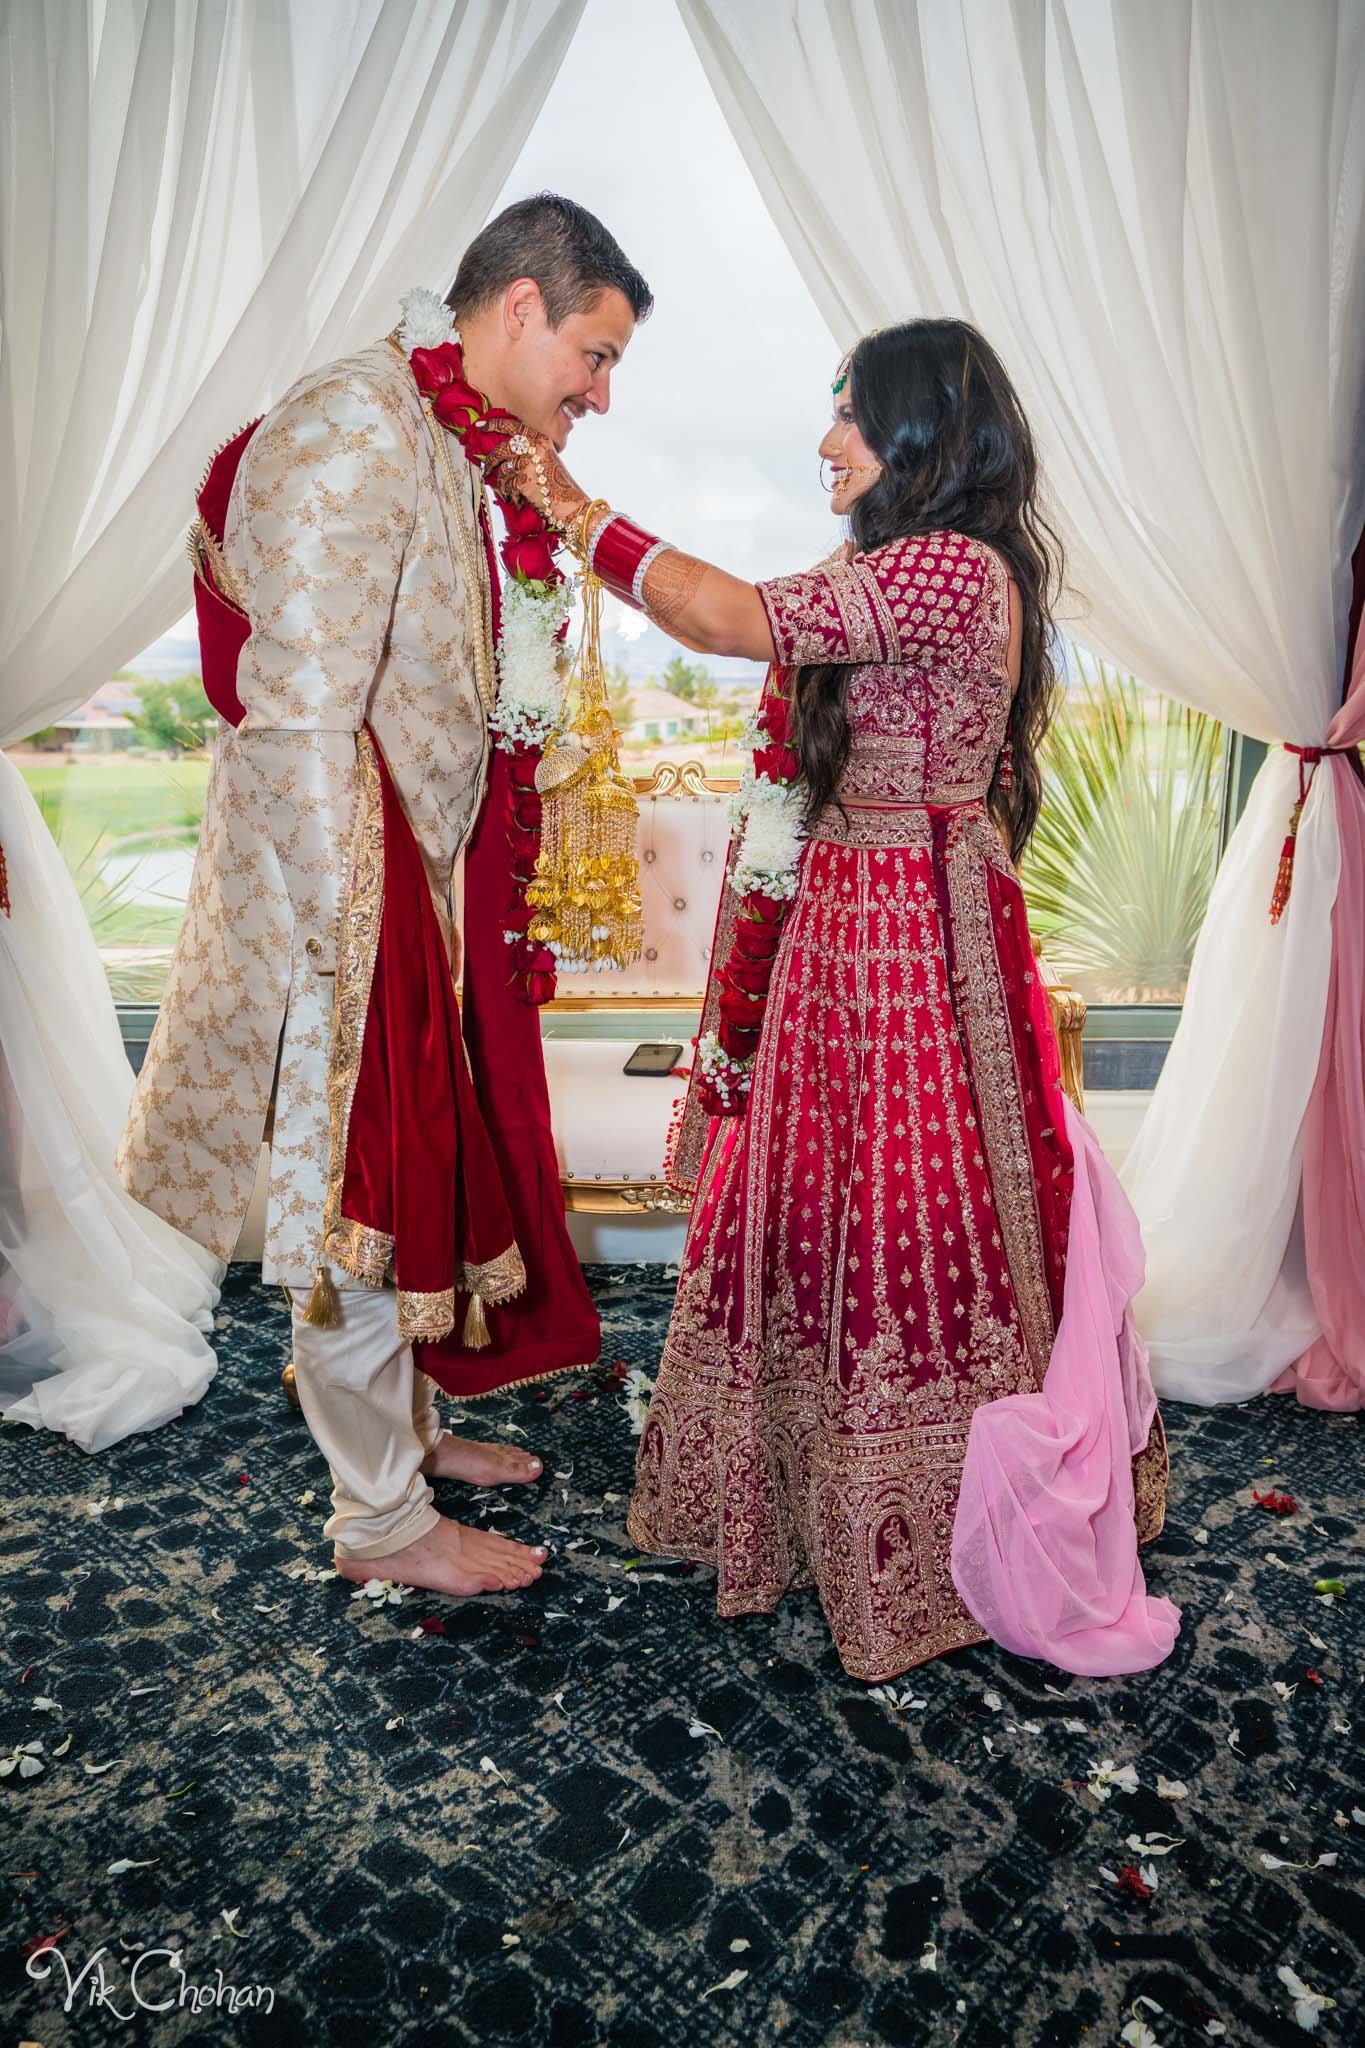 2022-06-09-Annie-&-Steven-Las-Vegas-Indian-Wedding-Ceremony-Photography-Vik-Chohan-Photography-Photo-Booth-Social-Media-VCP-203.jpg